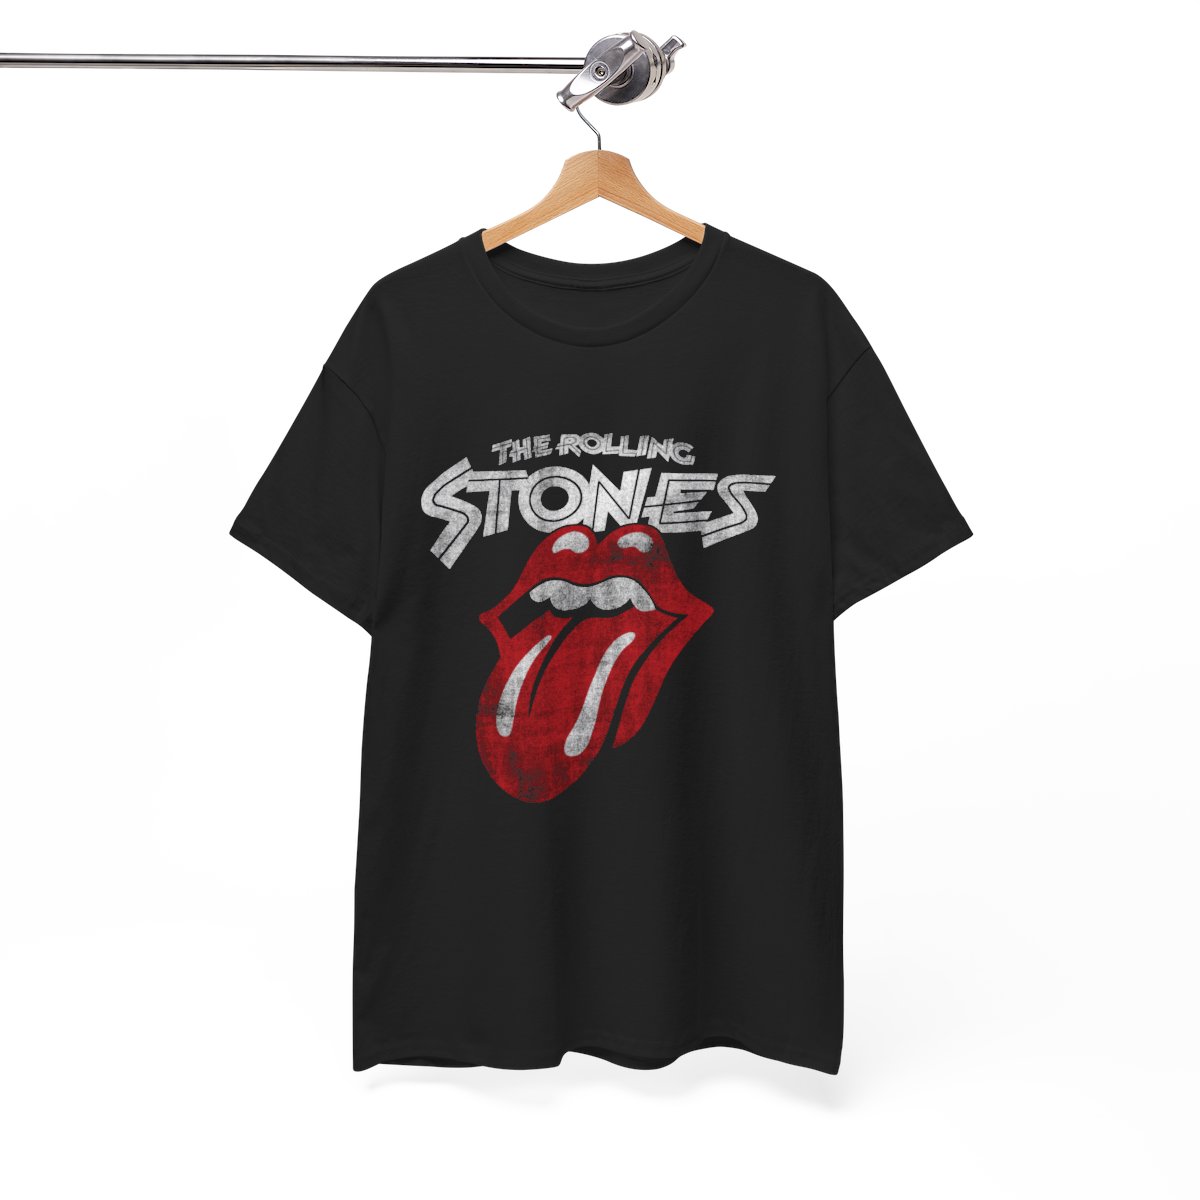 RollingStones Rock N Roll Tee Shirt product thumbnail image